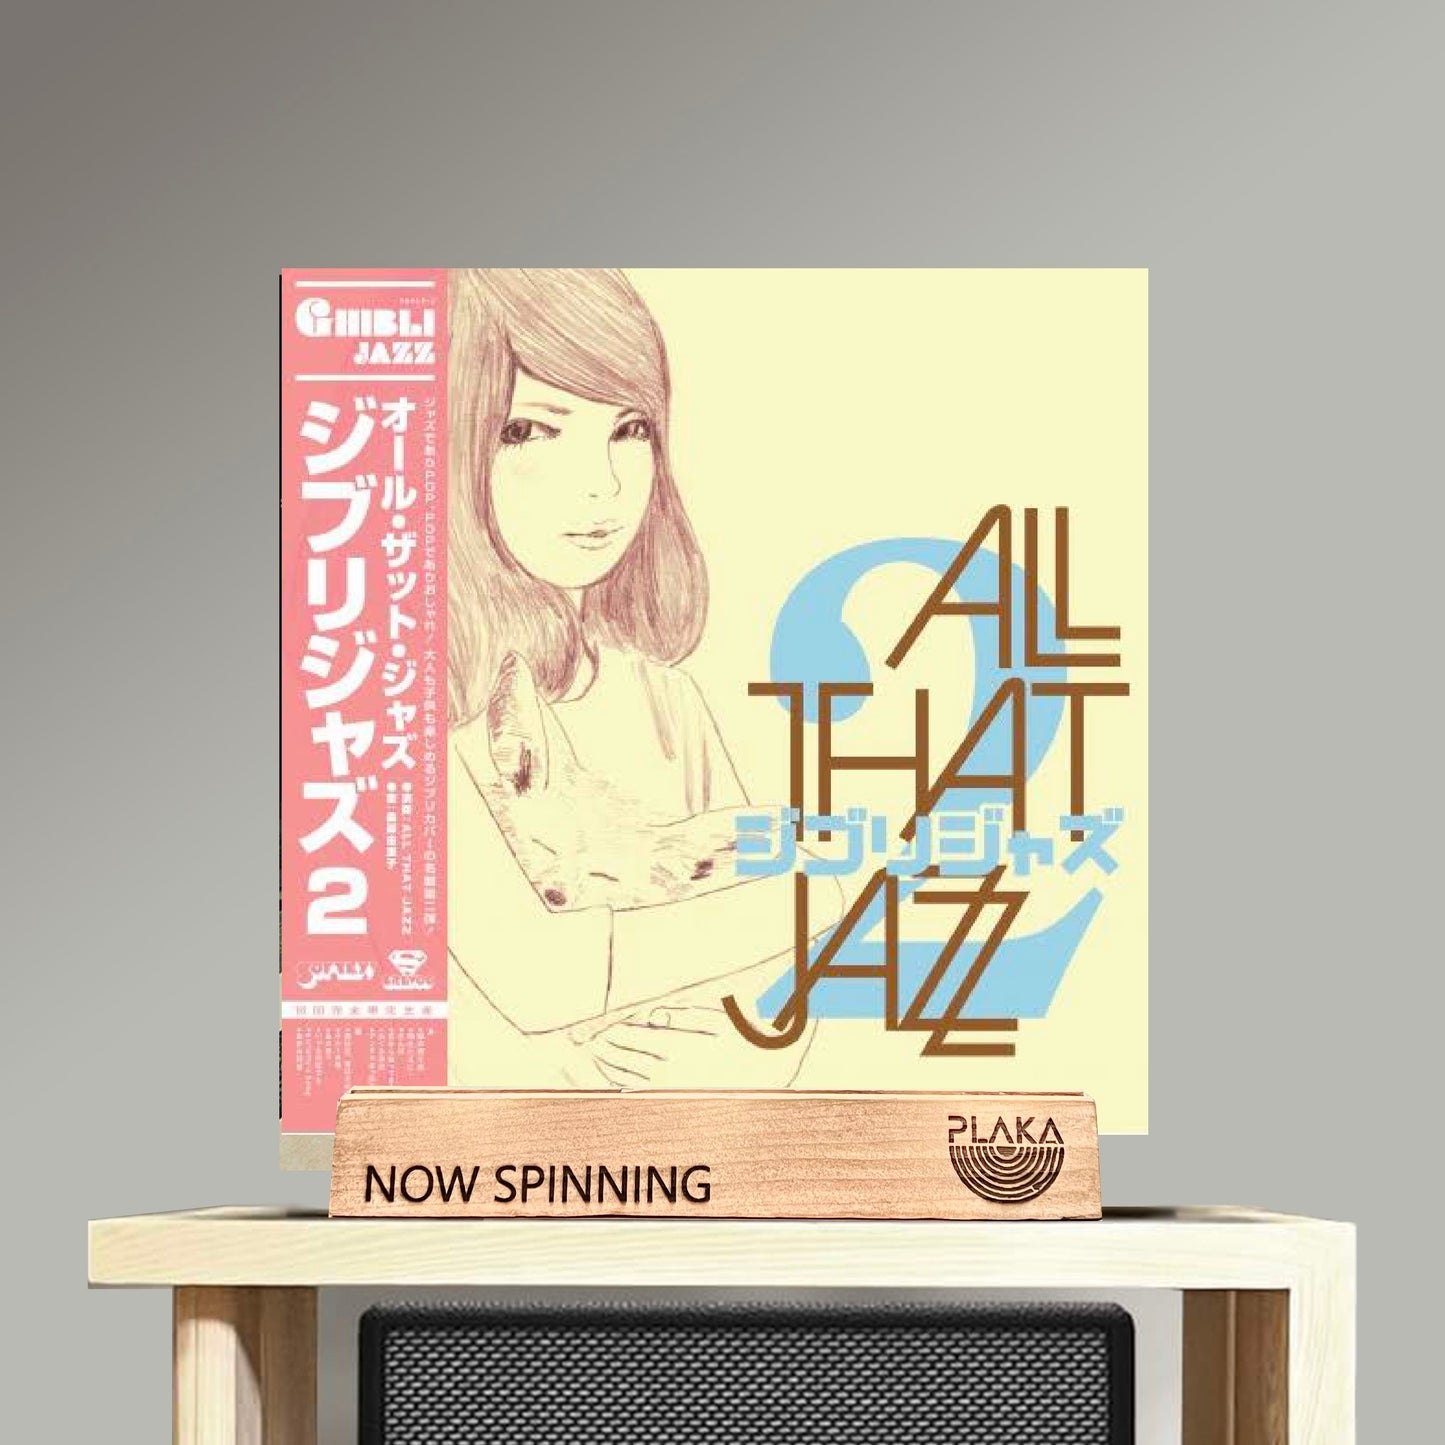 All That Jazz - Ghibli Jazz Vol. 2